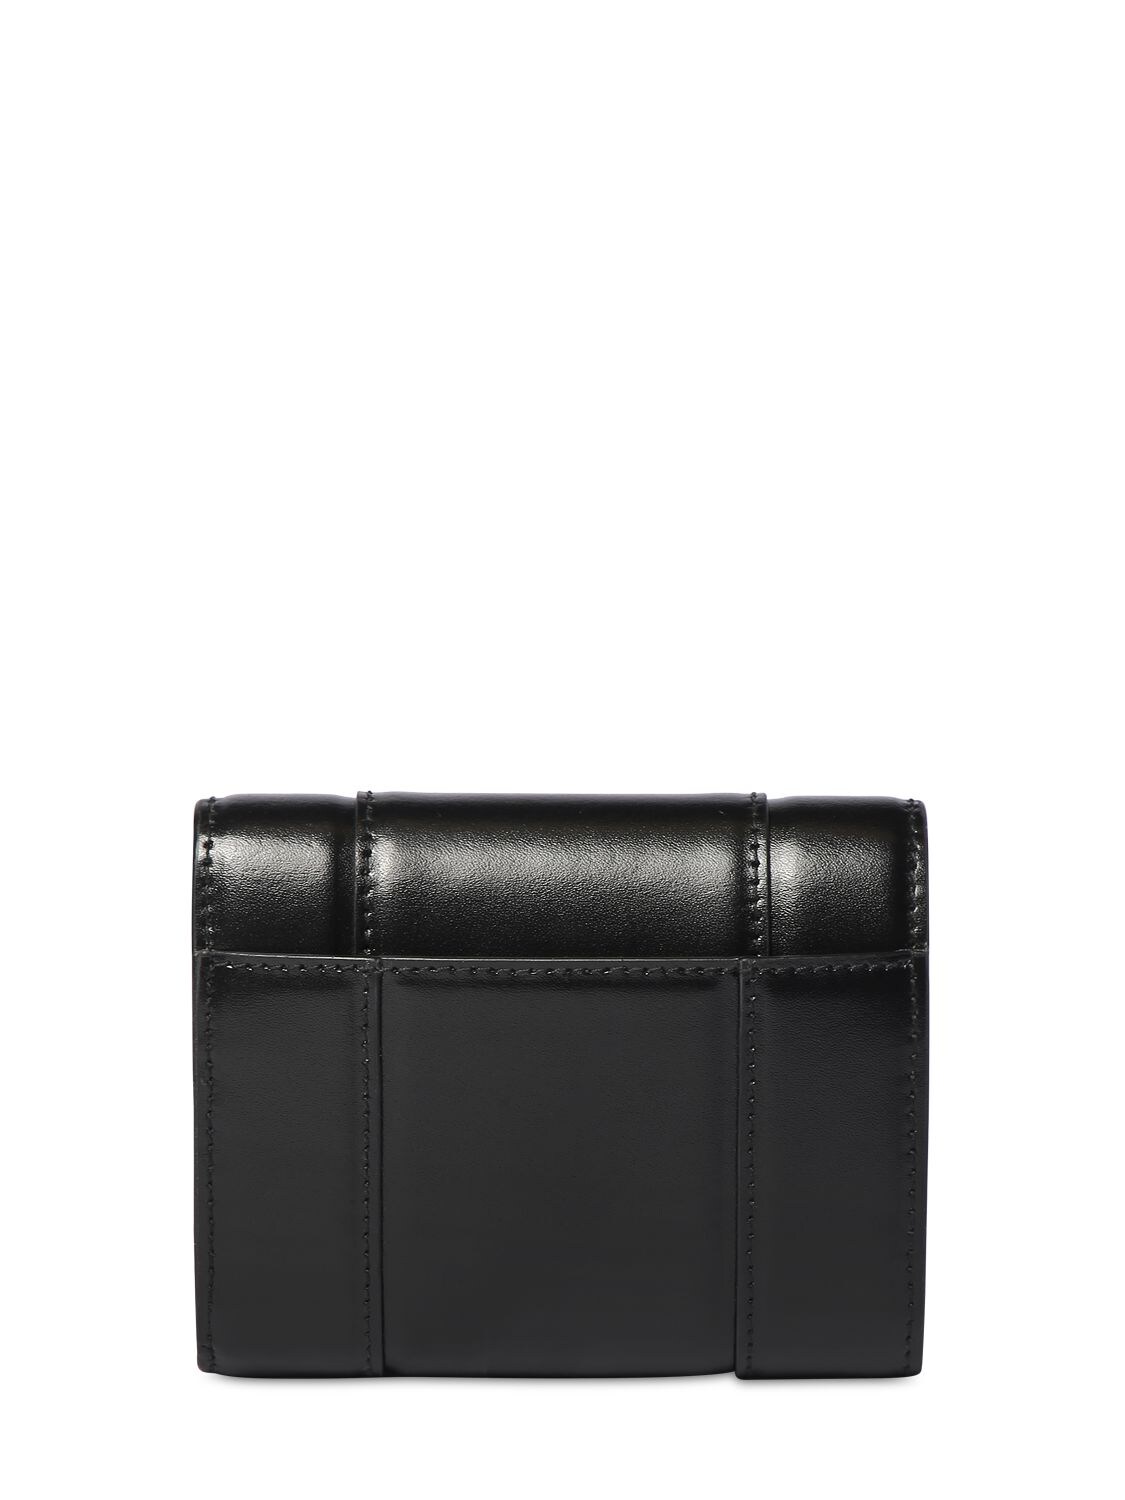 Balenciaga Hourglass Compact Leather Wallet In Black | ModeSens